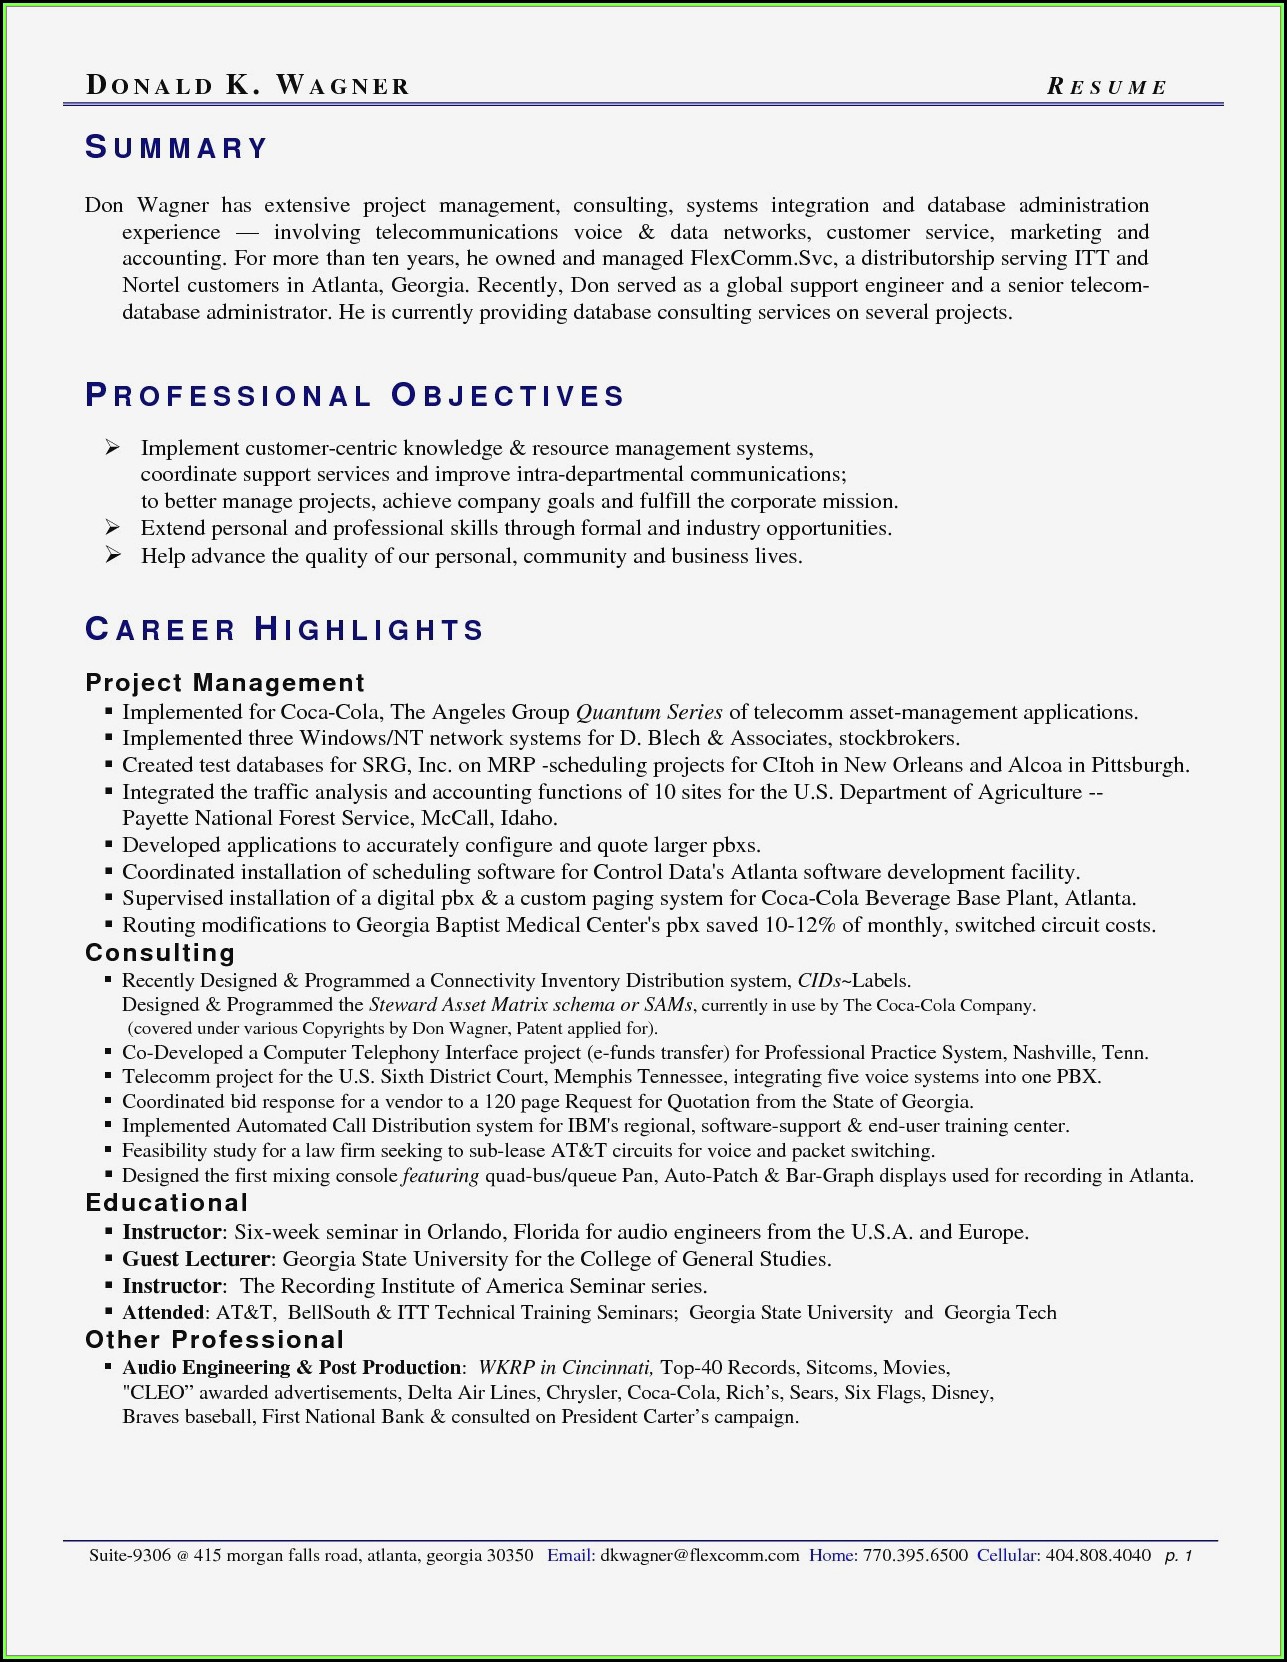 Professional resume writing service atlanta ga